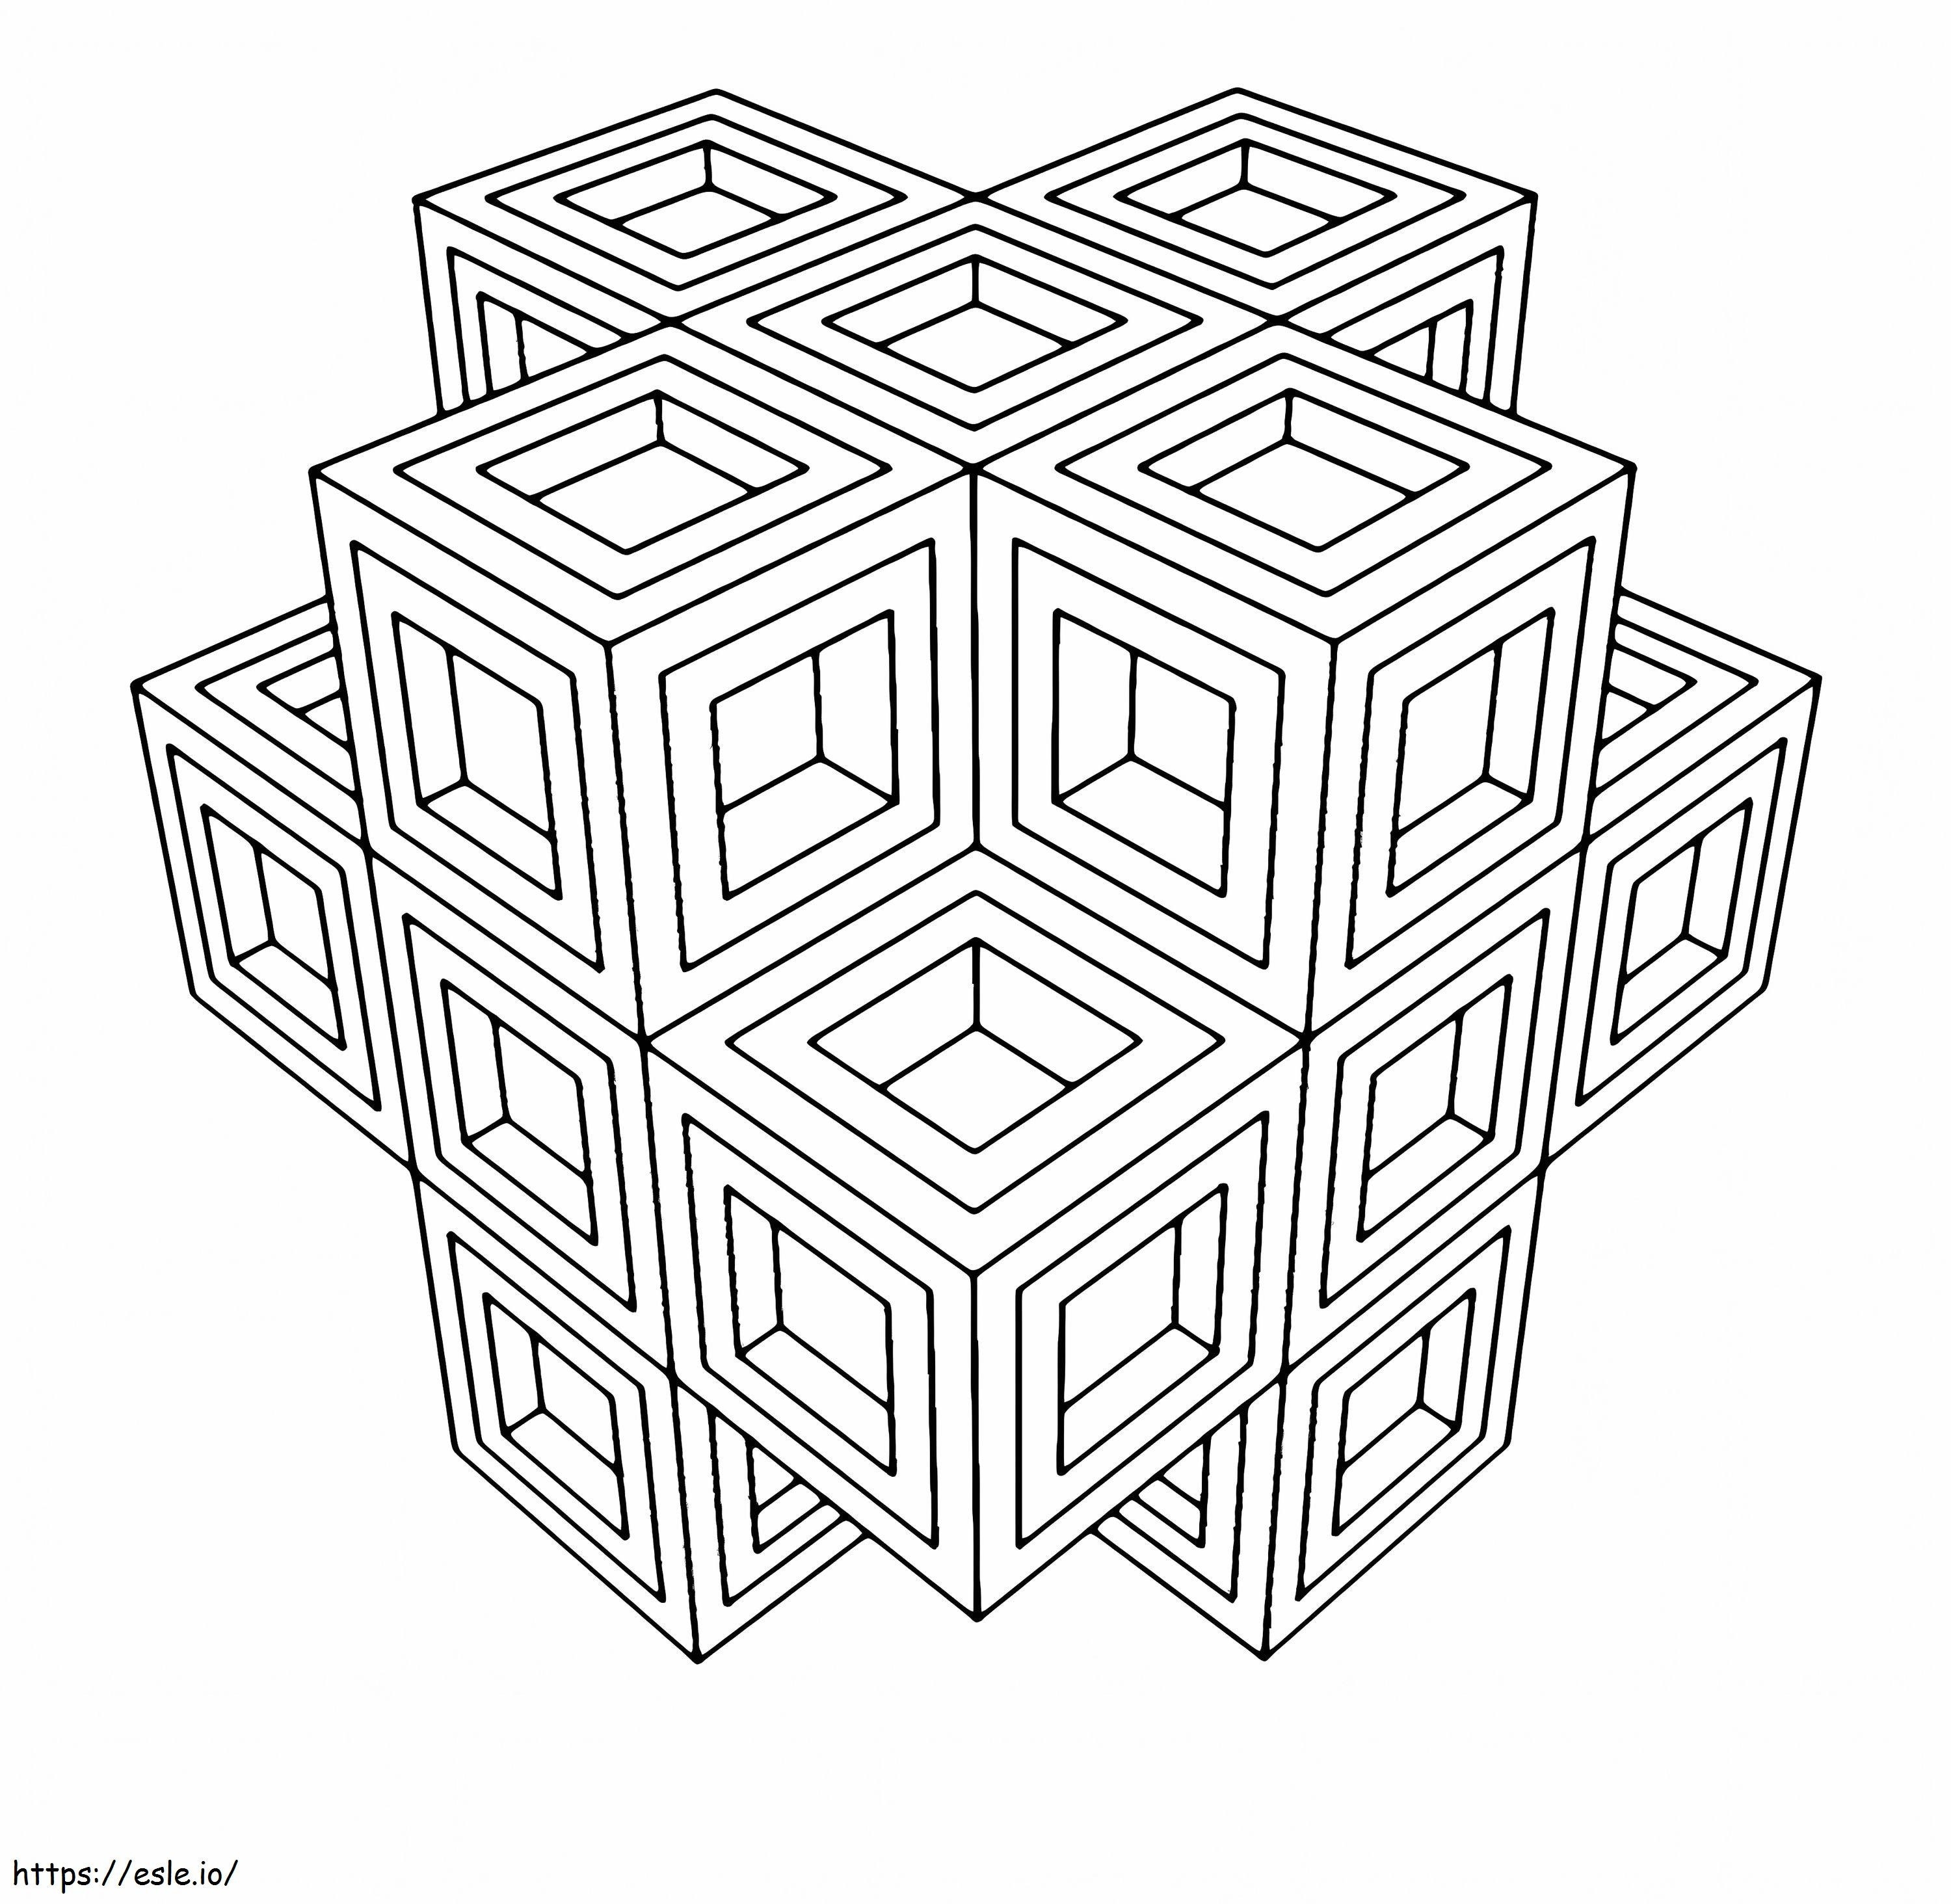 Quadrado Simples Geométrico para colorir